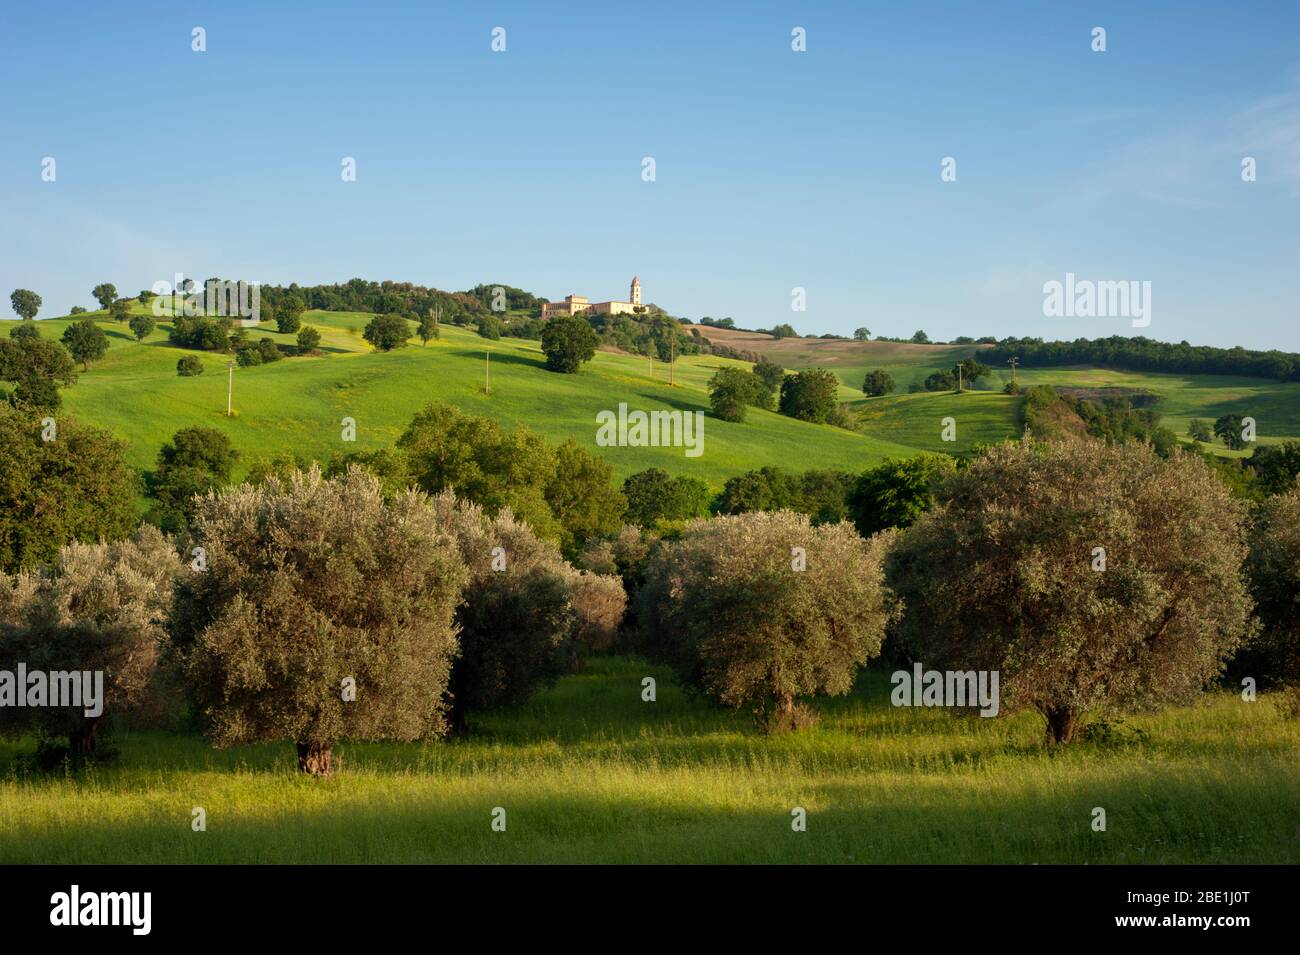 Italy, Basilicata, Sant'Arcangelo, olive grove and wheat fields Stock Photo